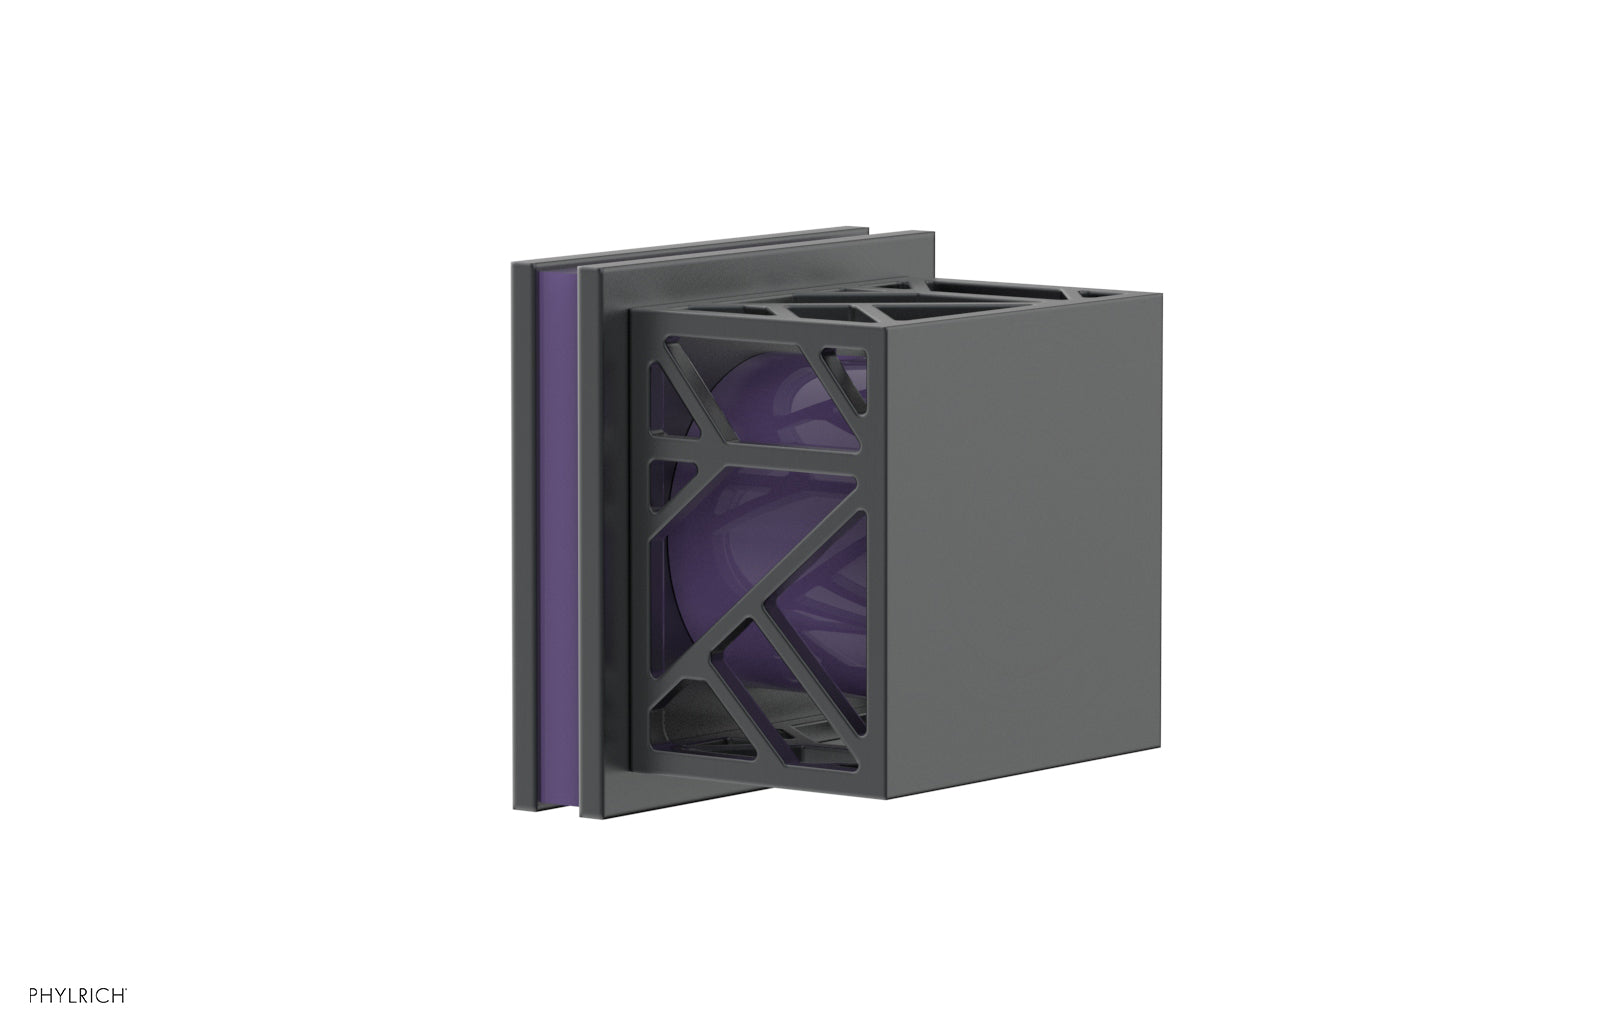 Phylrich JOLIE Volume Control/Diverter Trim - Square Handle with "Purple" Accents